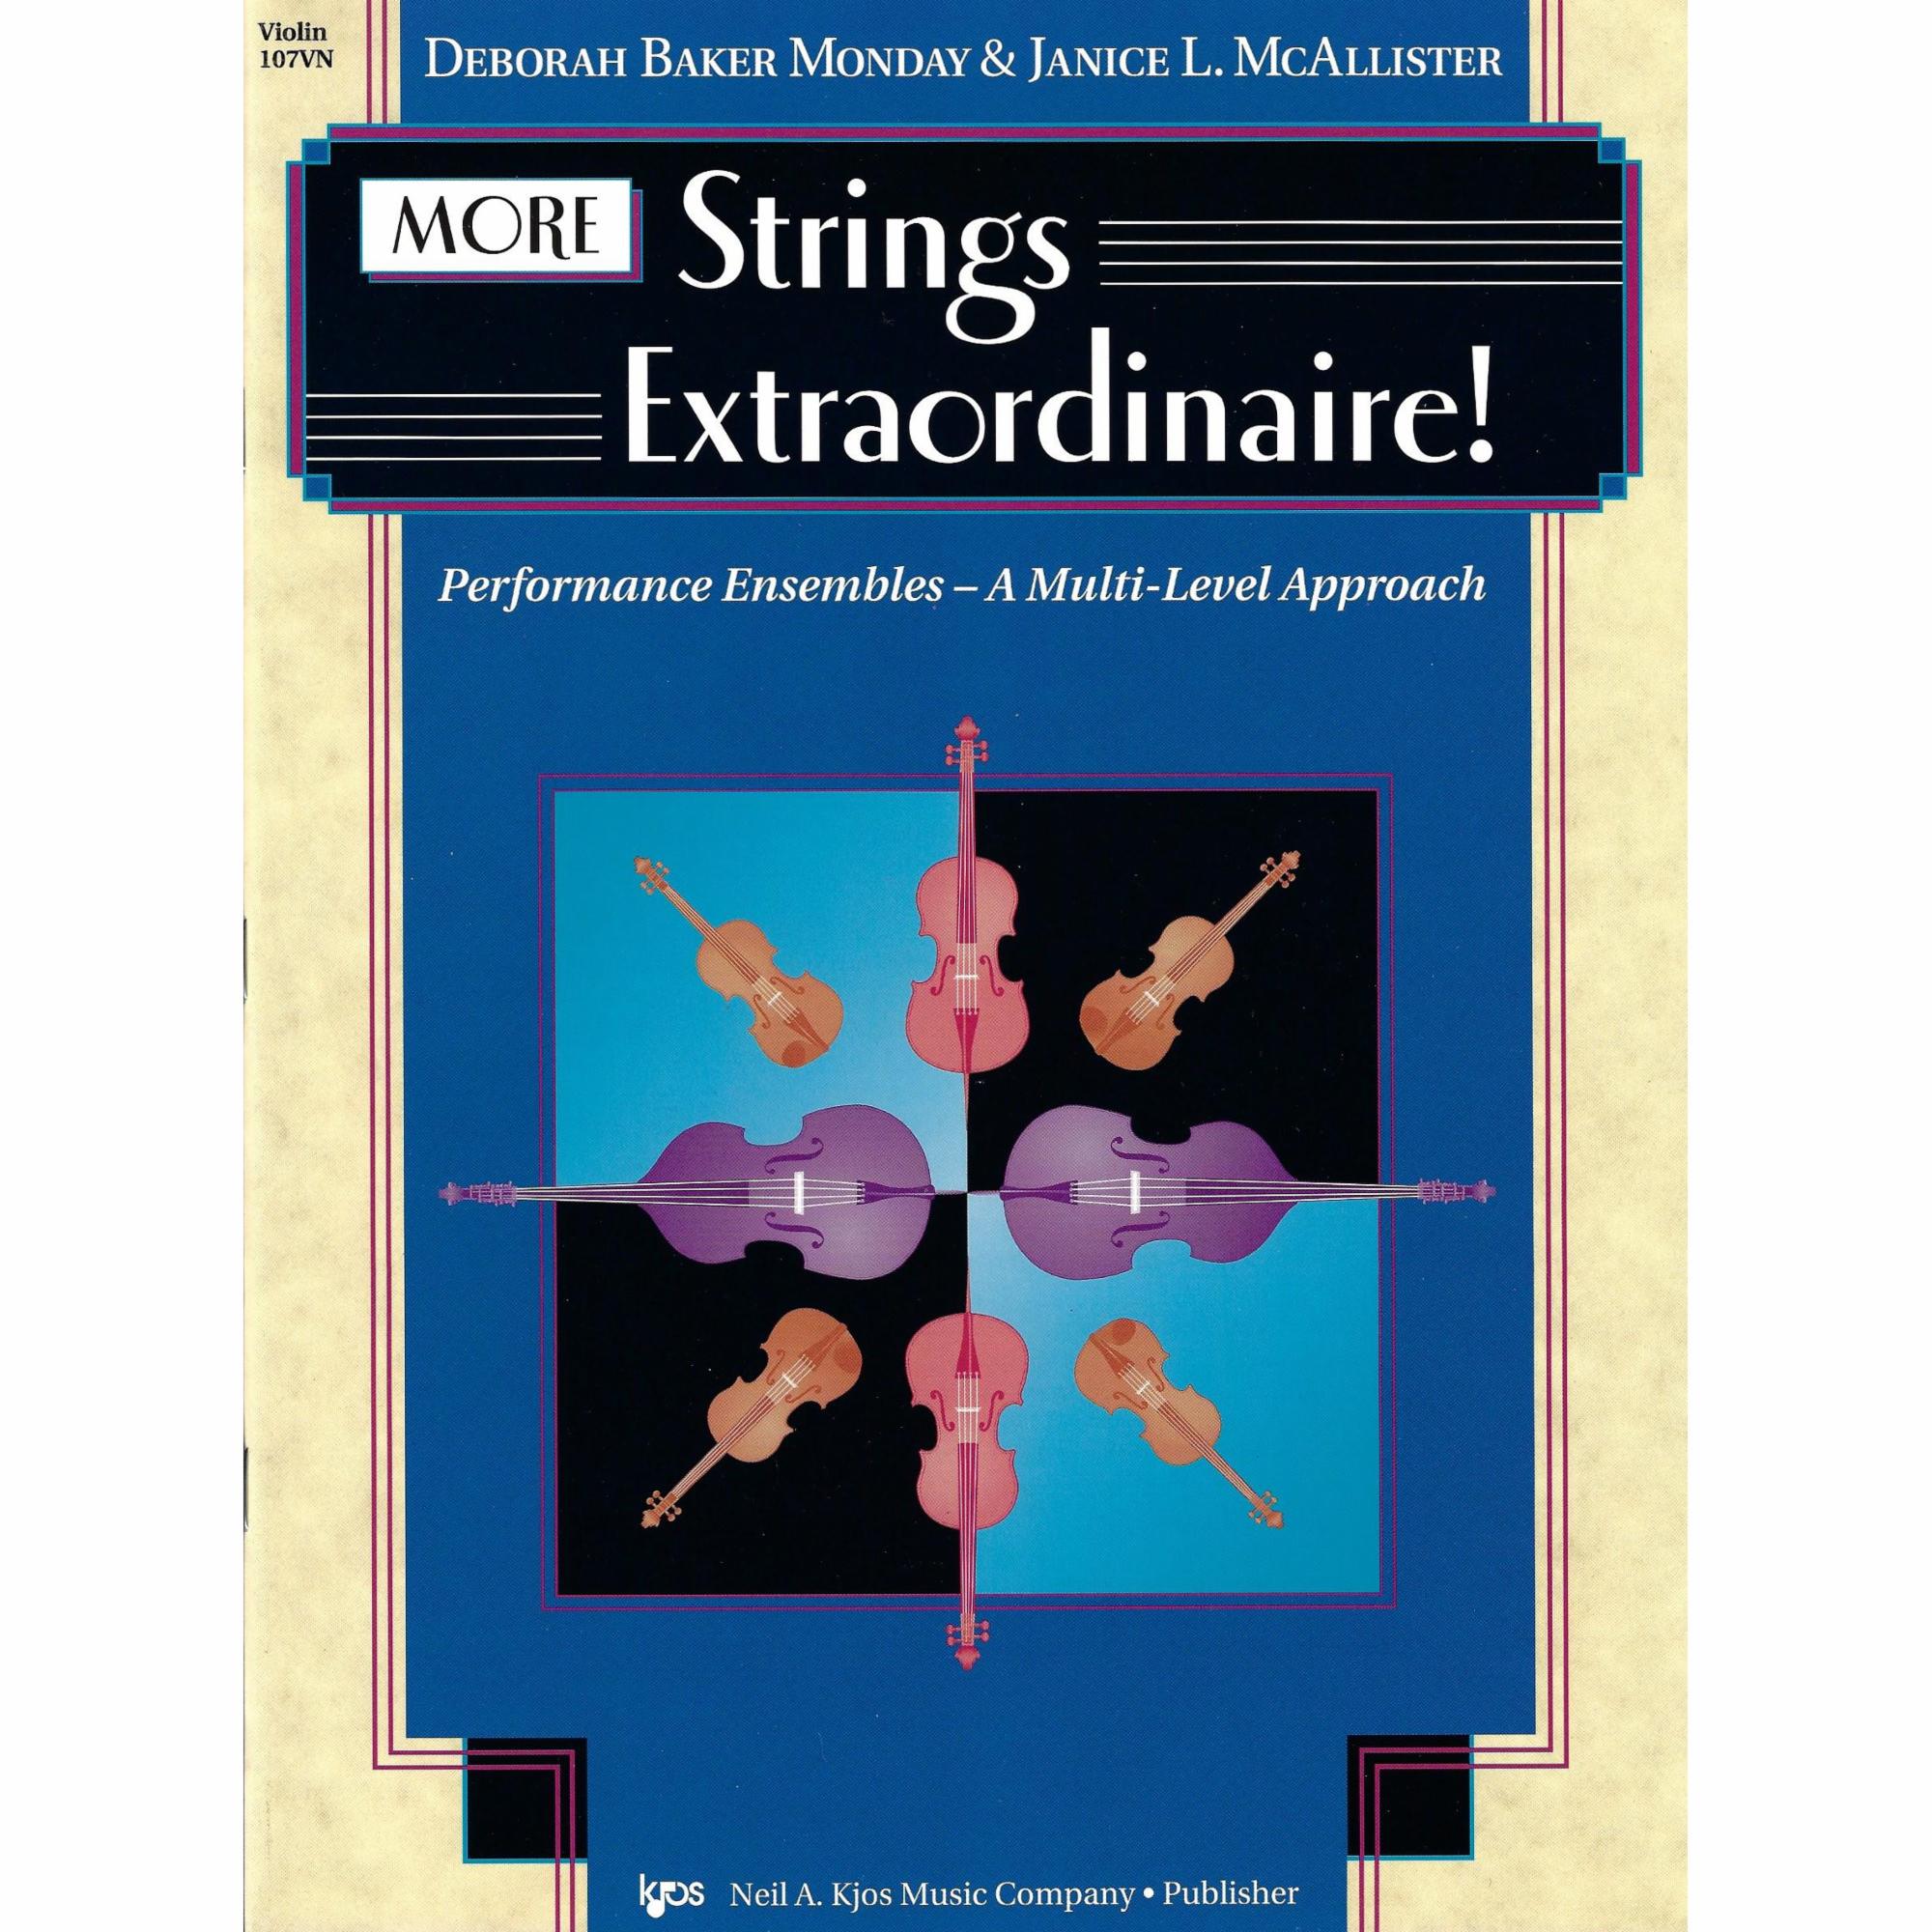 More Strings Extraordinaire!